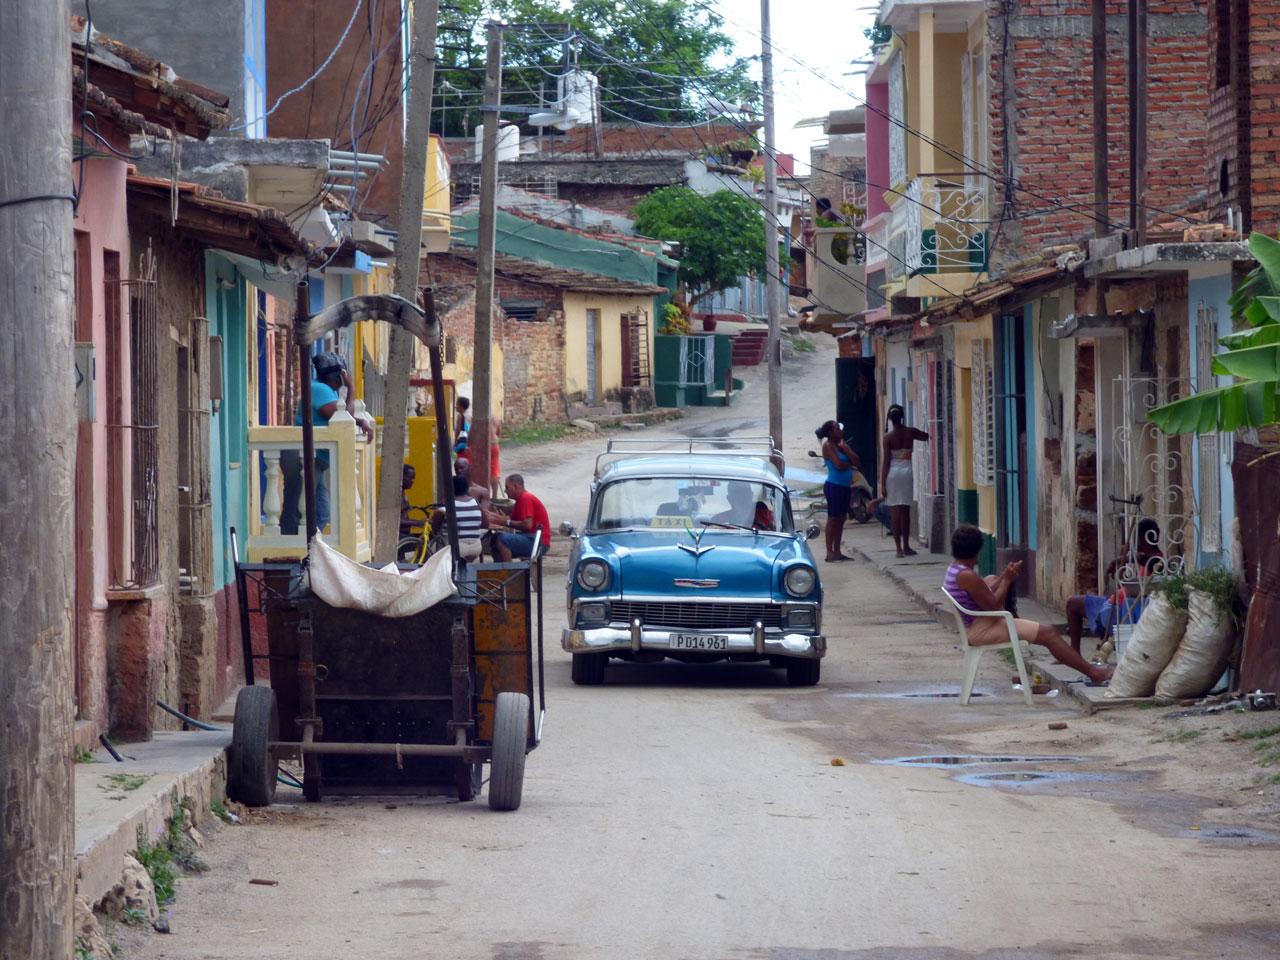 Street scene in Trinidad, Cuba